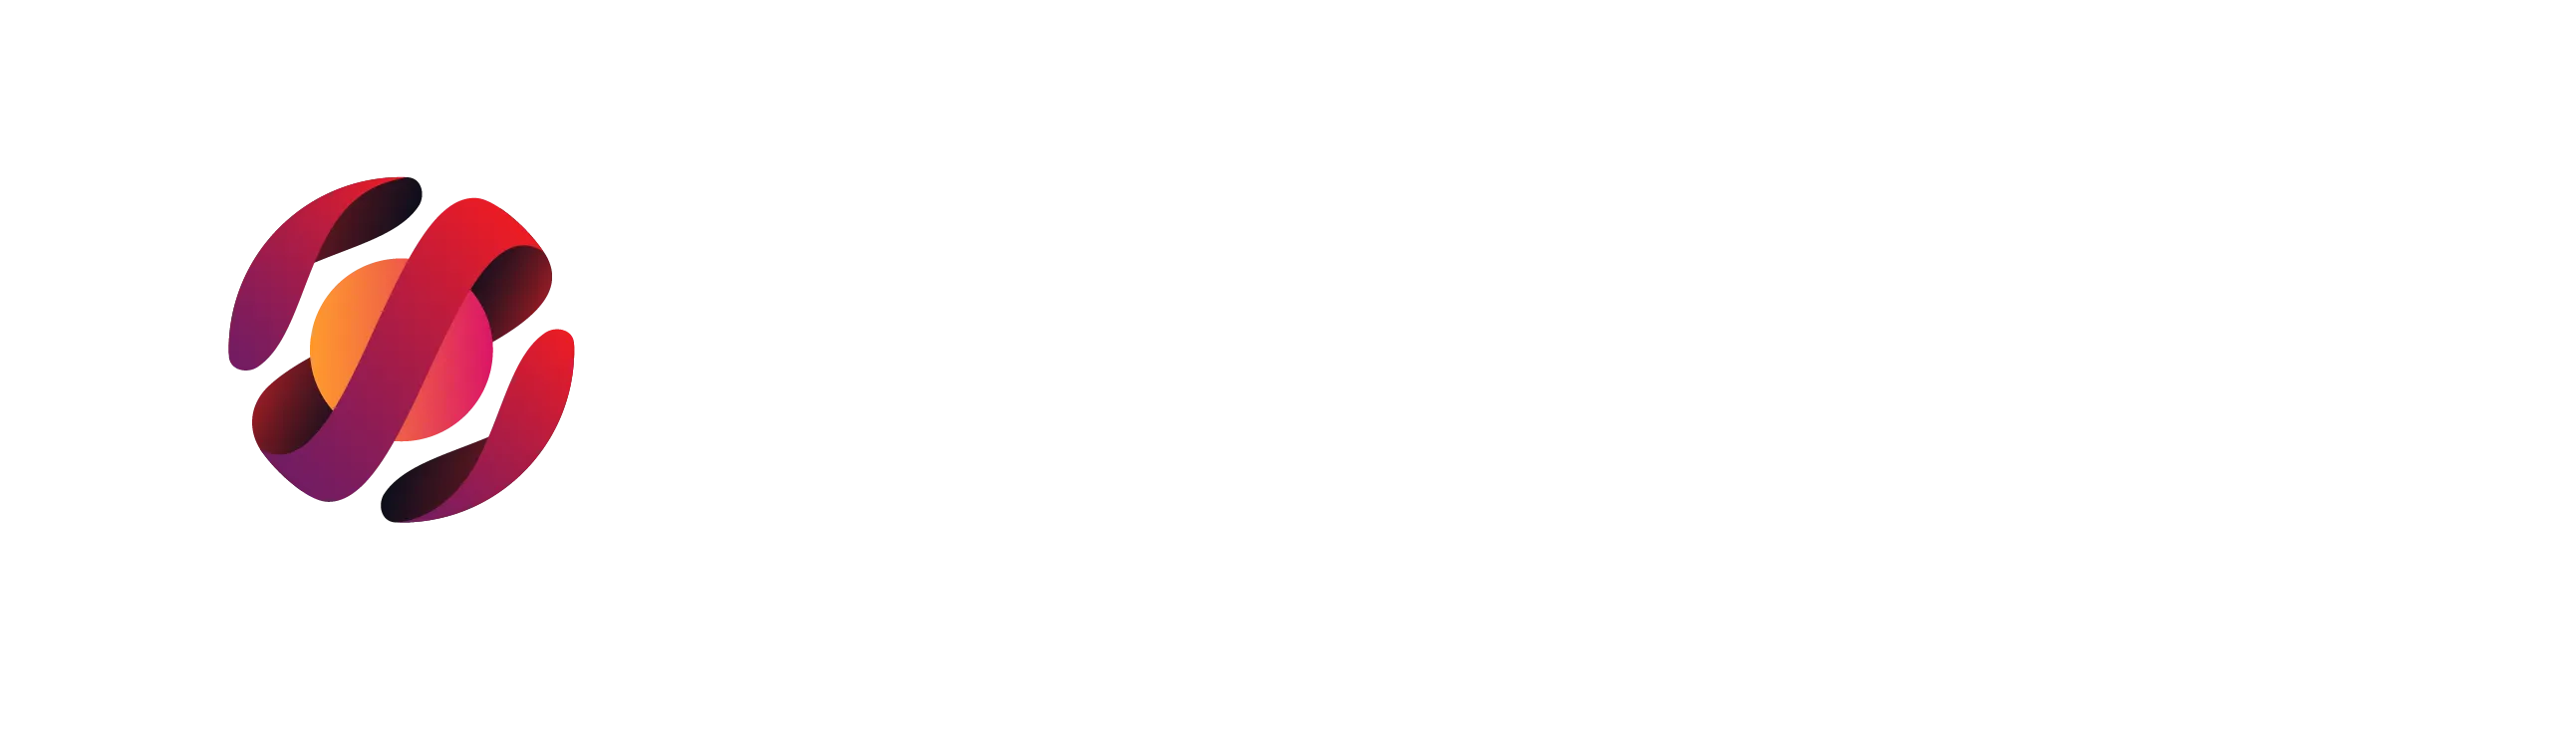 FirstByte Media